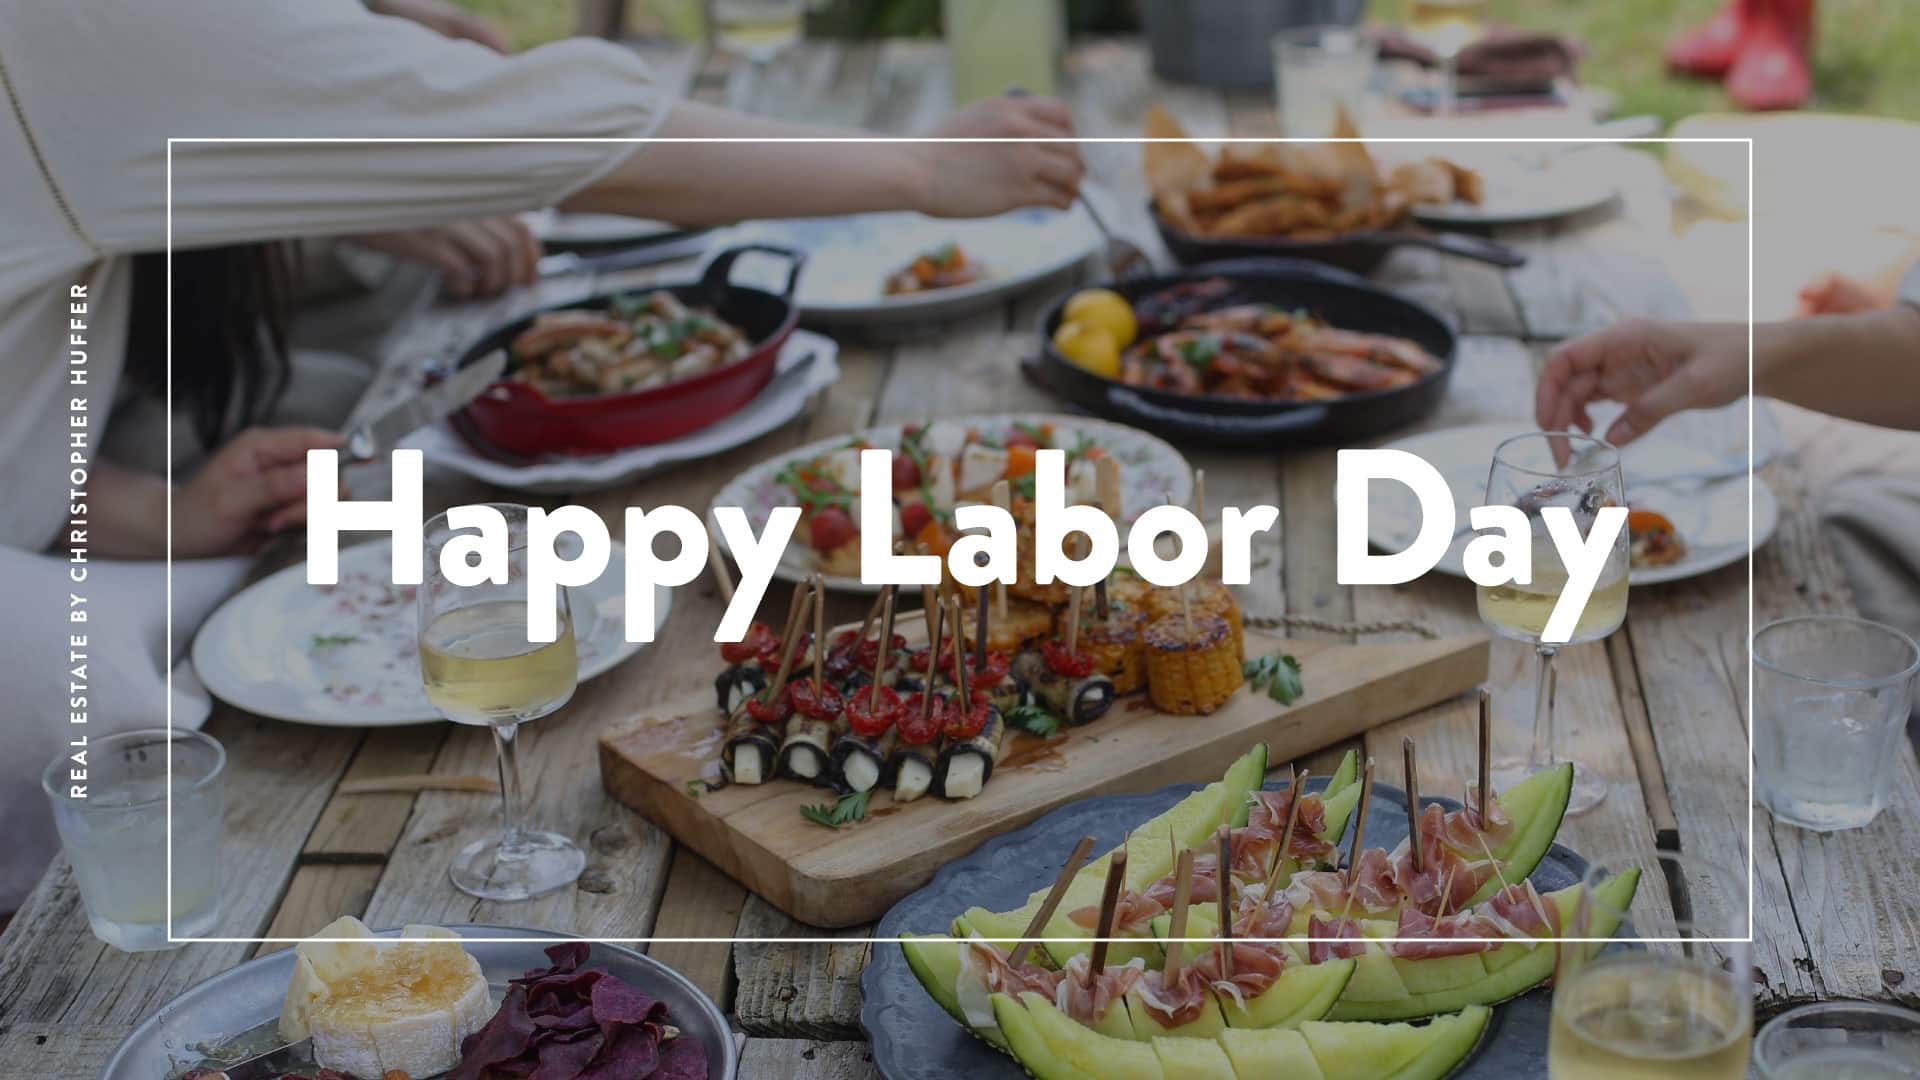 Happy Labor Day from Christopher Huffer, Atlanta Realtor